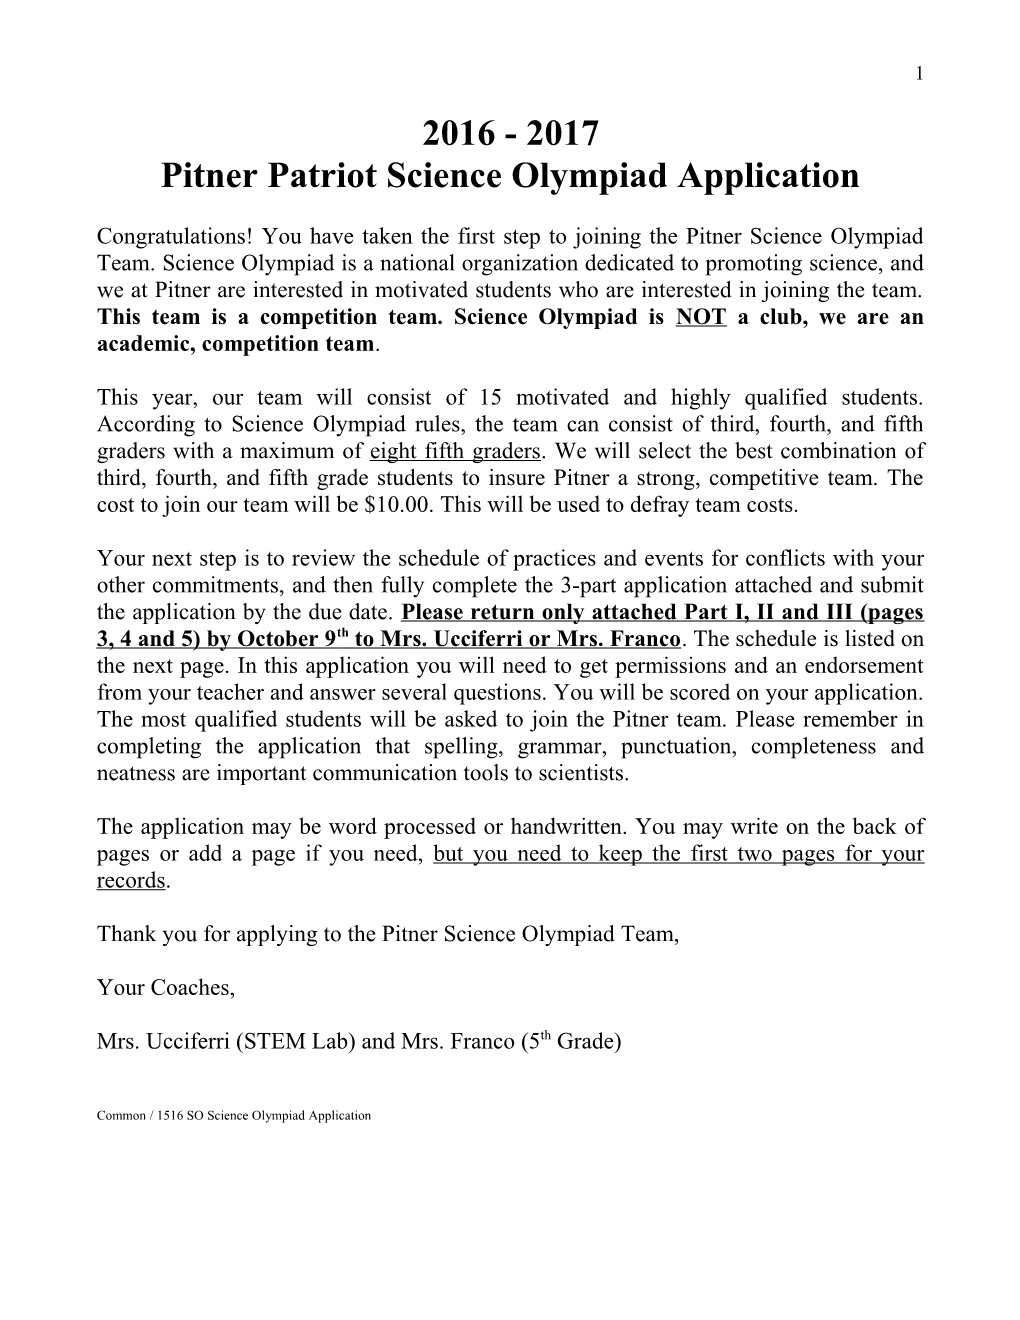 Pitner Patriot Science Olympiad Application